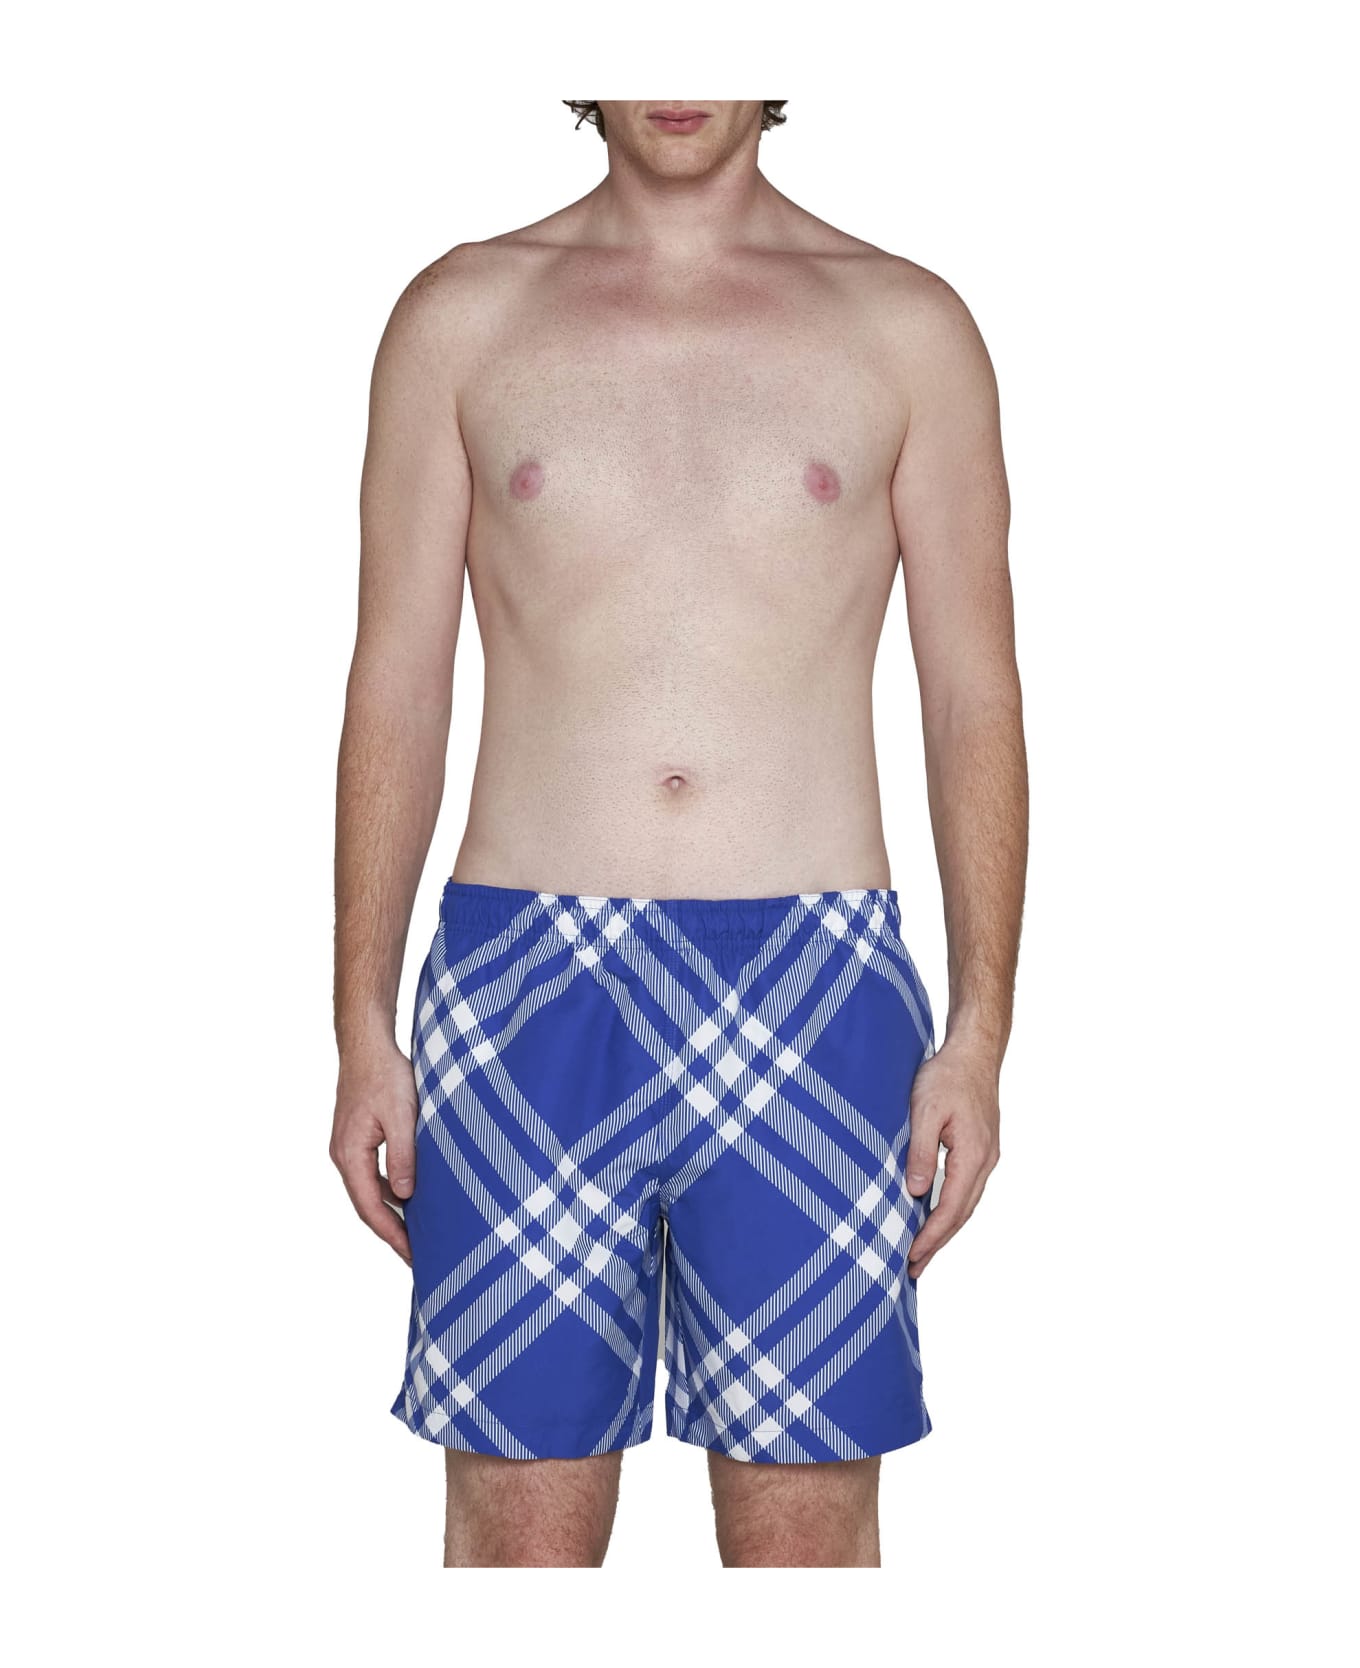 Burberry Check Printed Swim Shorts - Knight ip check